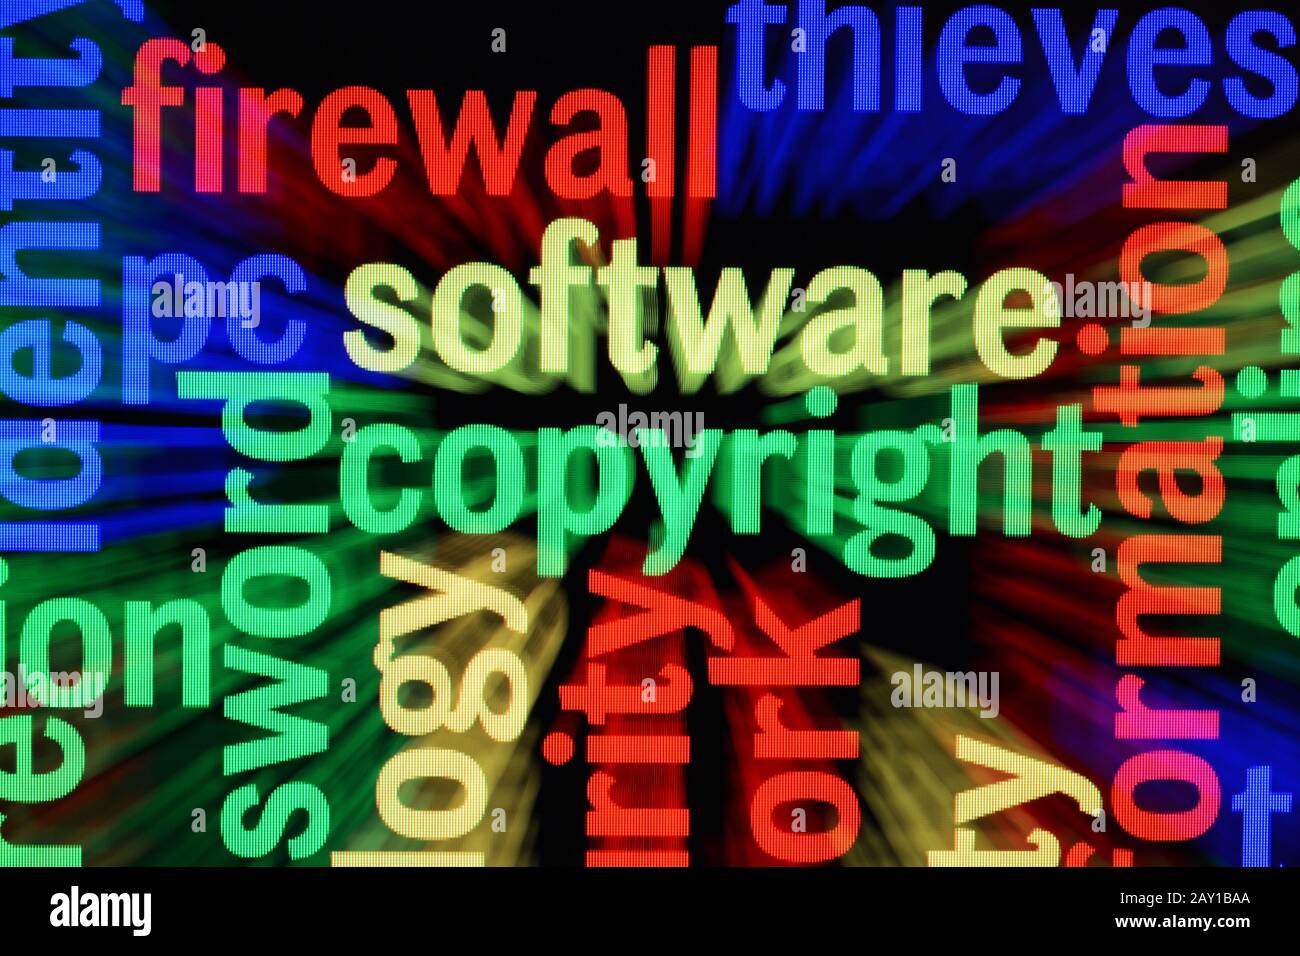 Software copyright Stock Photo